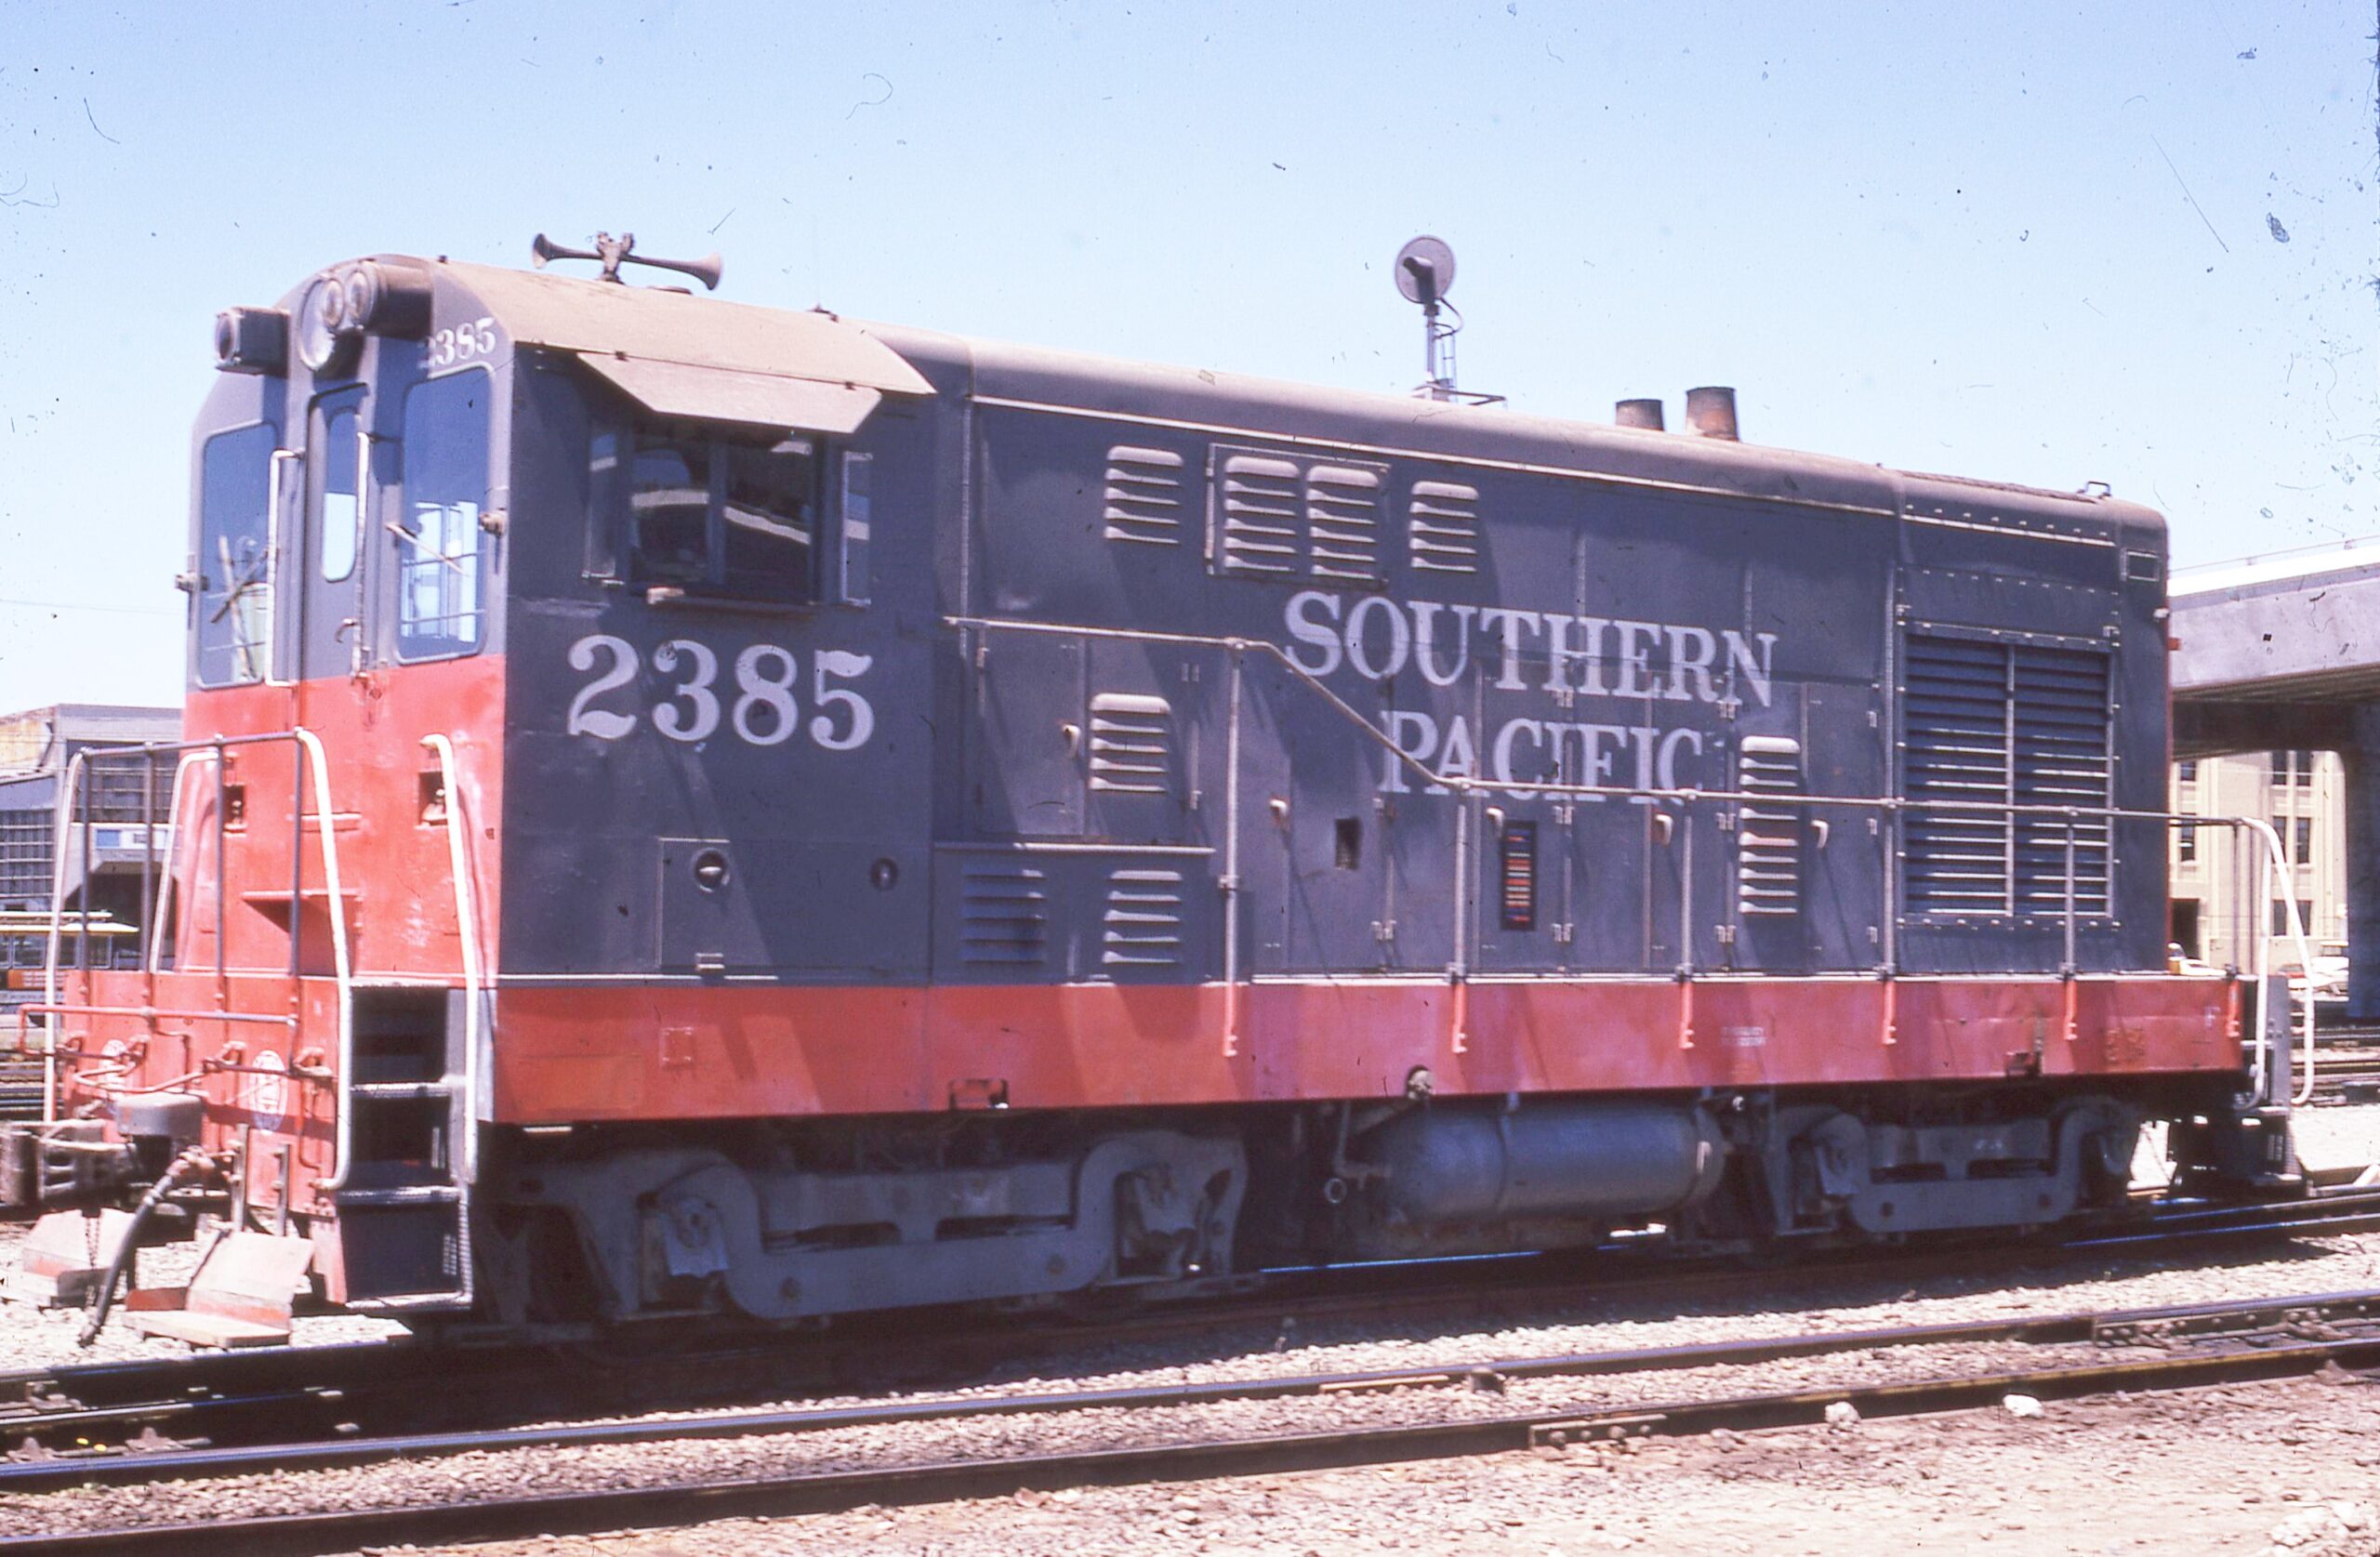 Southern Pacific Lines | San Francisco, California | Class H10-44 #2385 diesel-electric locomotive | April 2, 1973 | Elmer Kremkow Collection